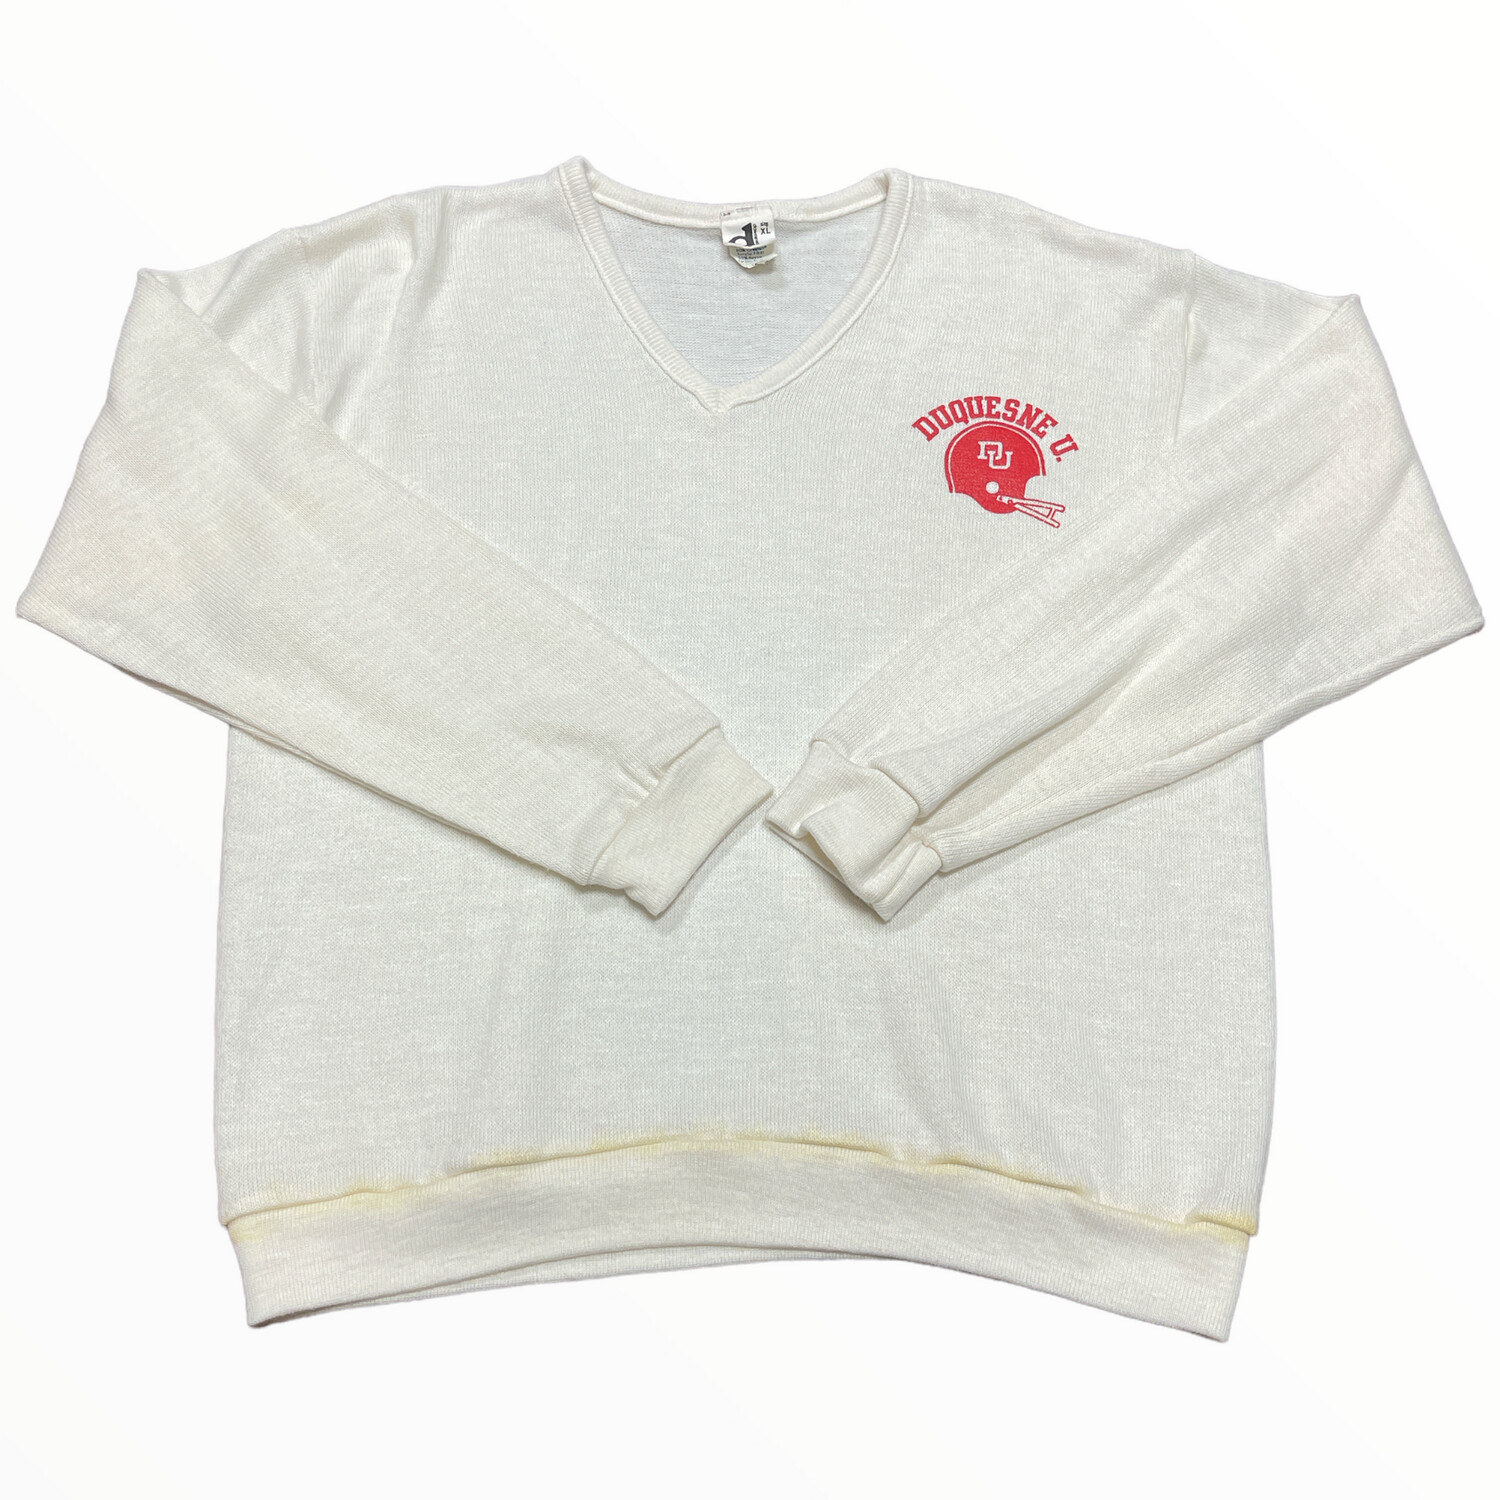 Vintage Duquesne University Sweater, Size: XL, Color: White, Style: College